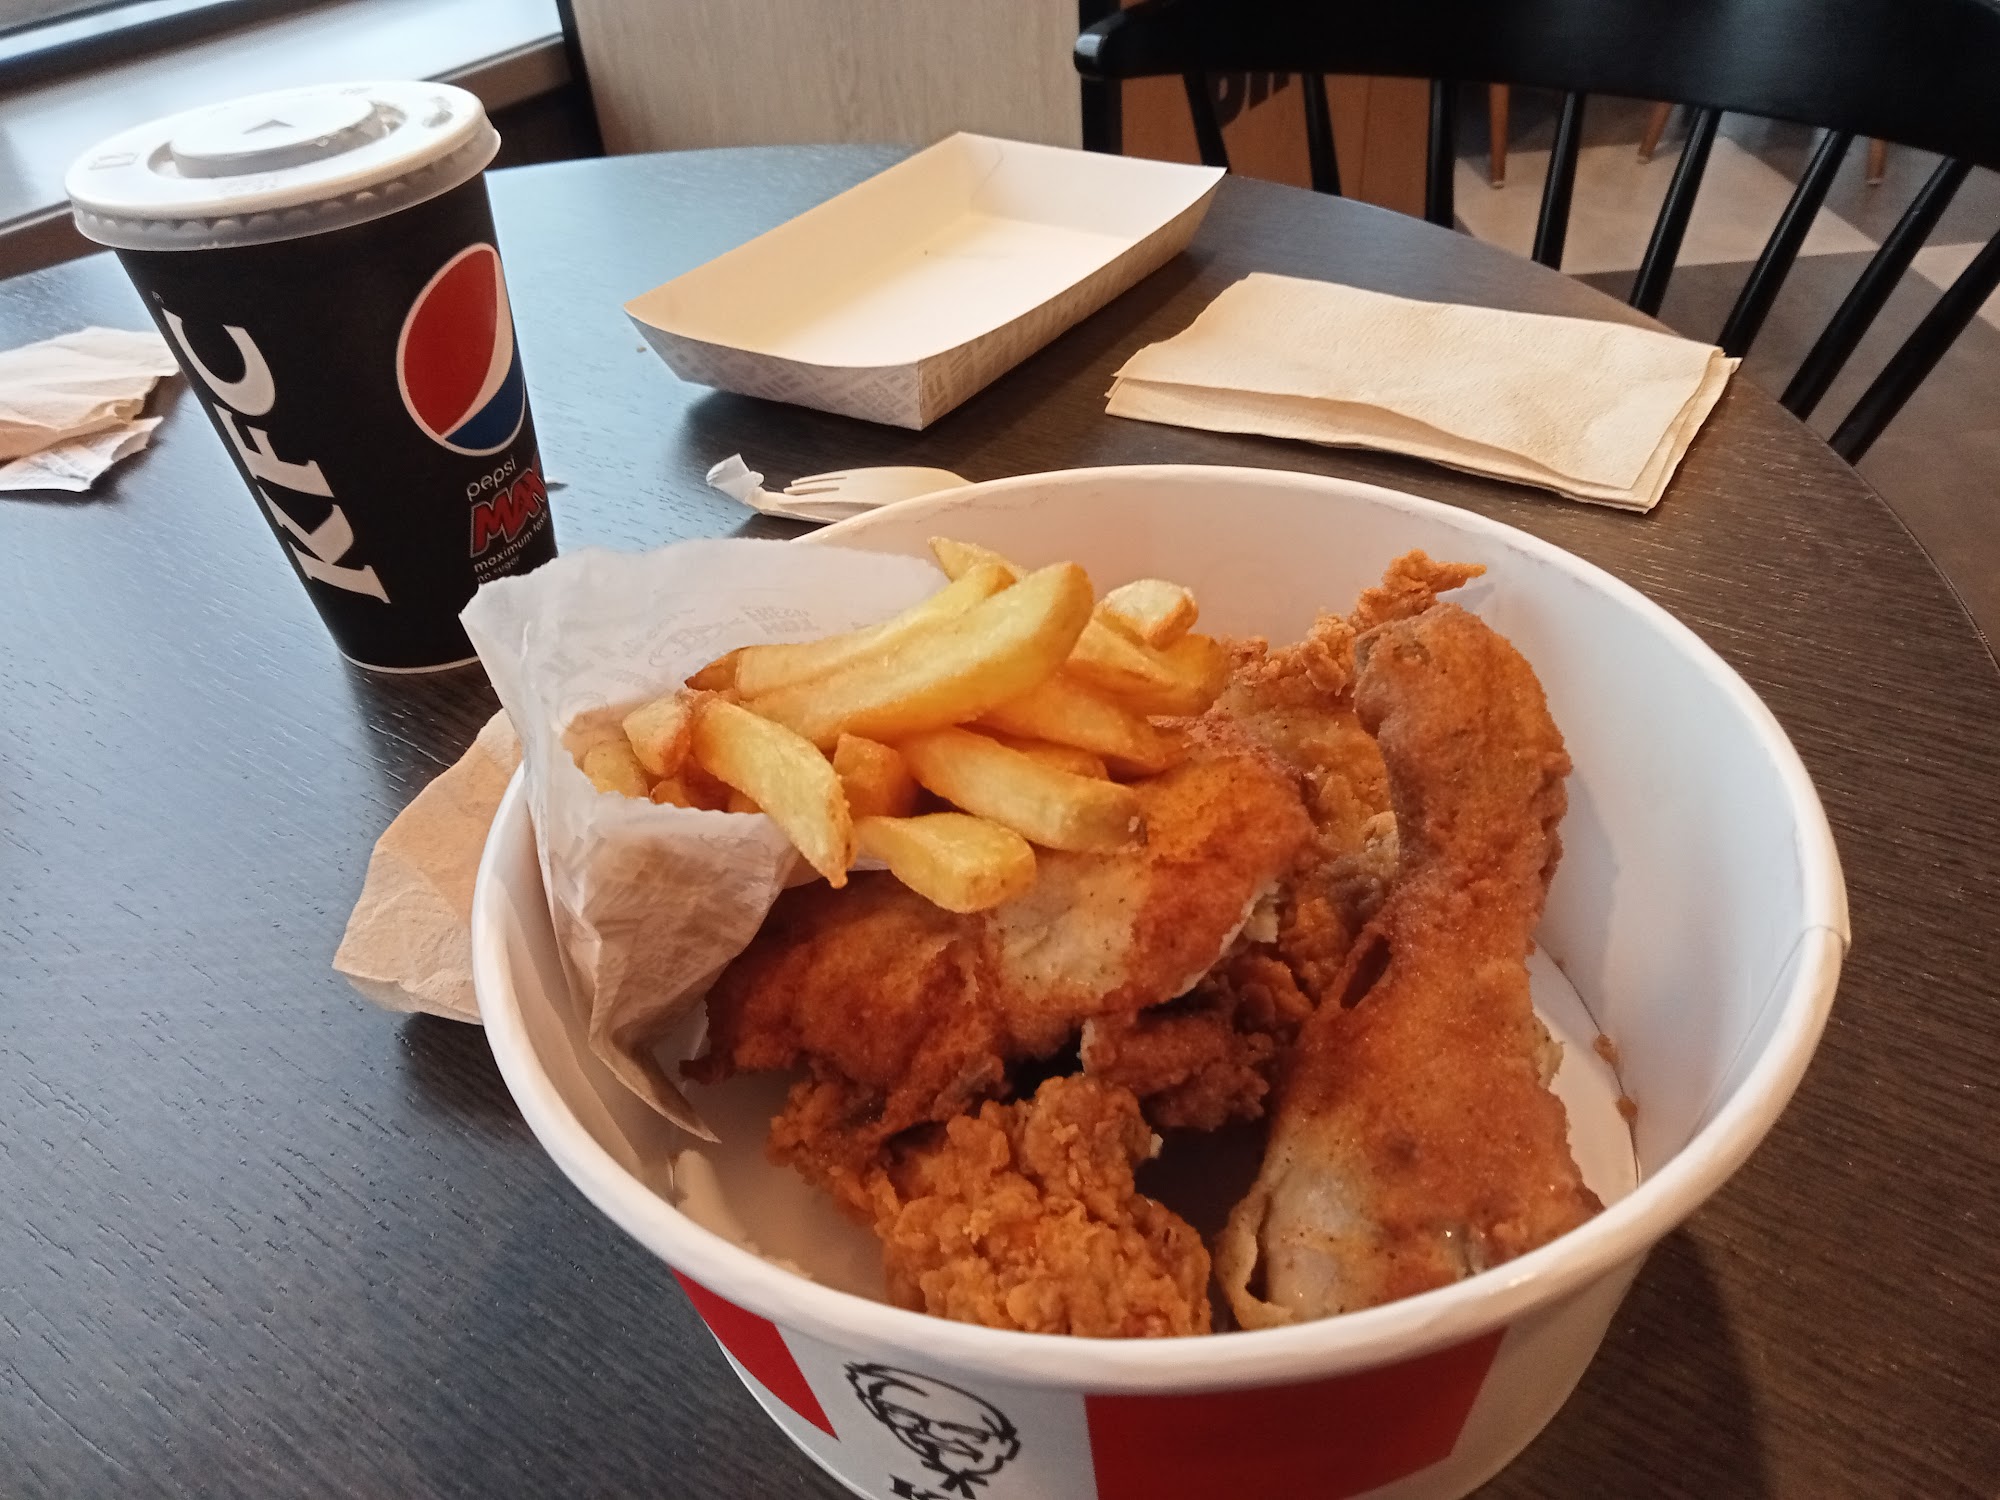 KFC Kirkcaldy - Central Retail Park